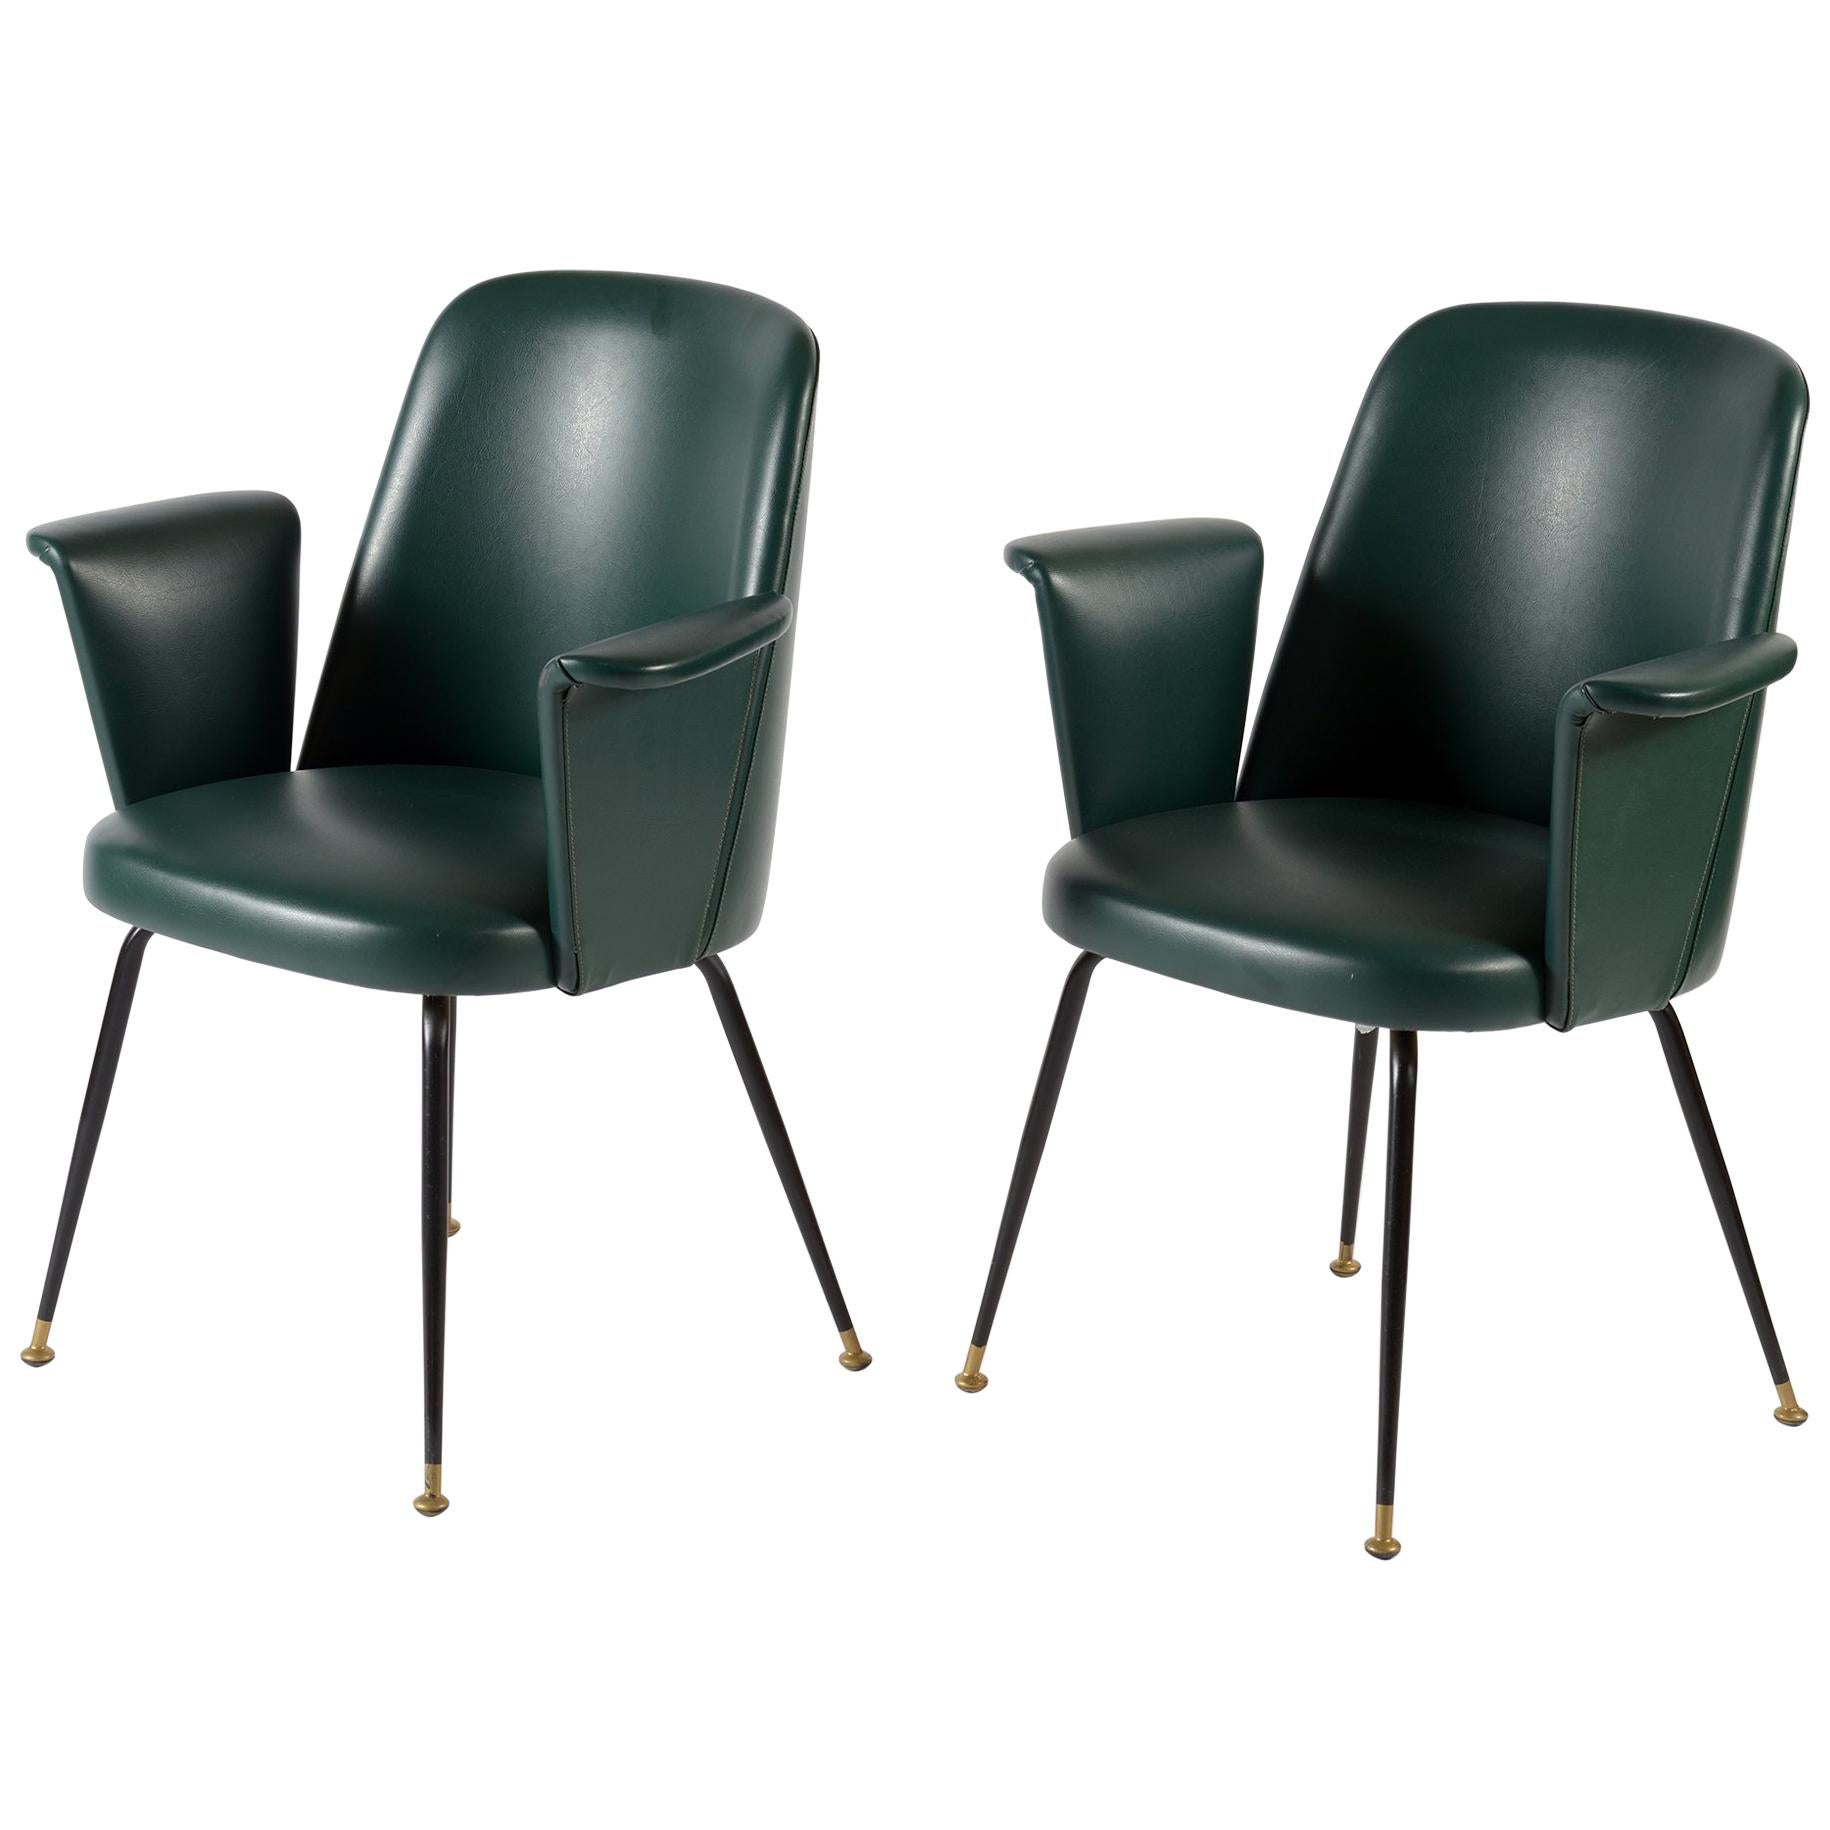 Midcentury Italian Pair of Chairs Brass Leggs Green Original Leatherette, 1950s